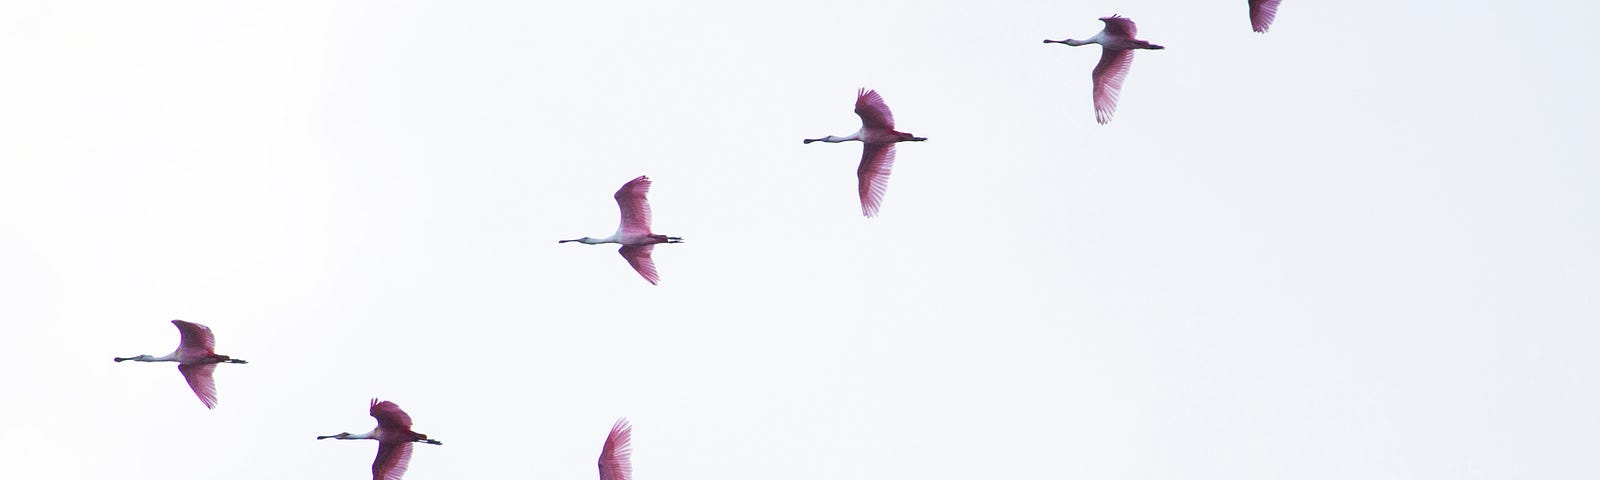 Image of birds flying symbolically suggesting migration